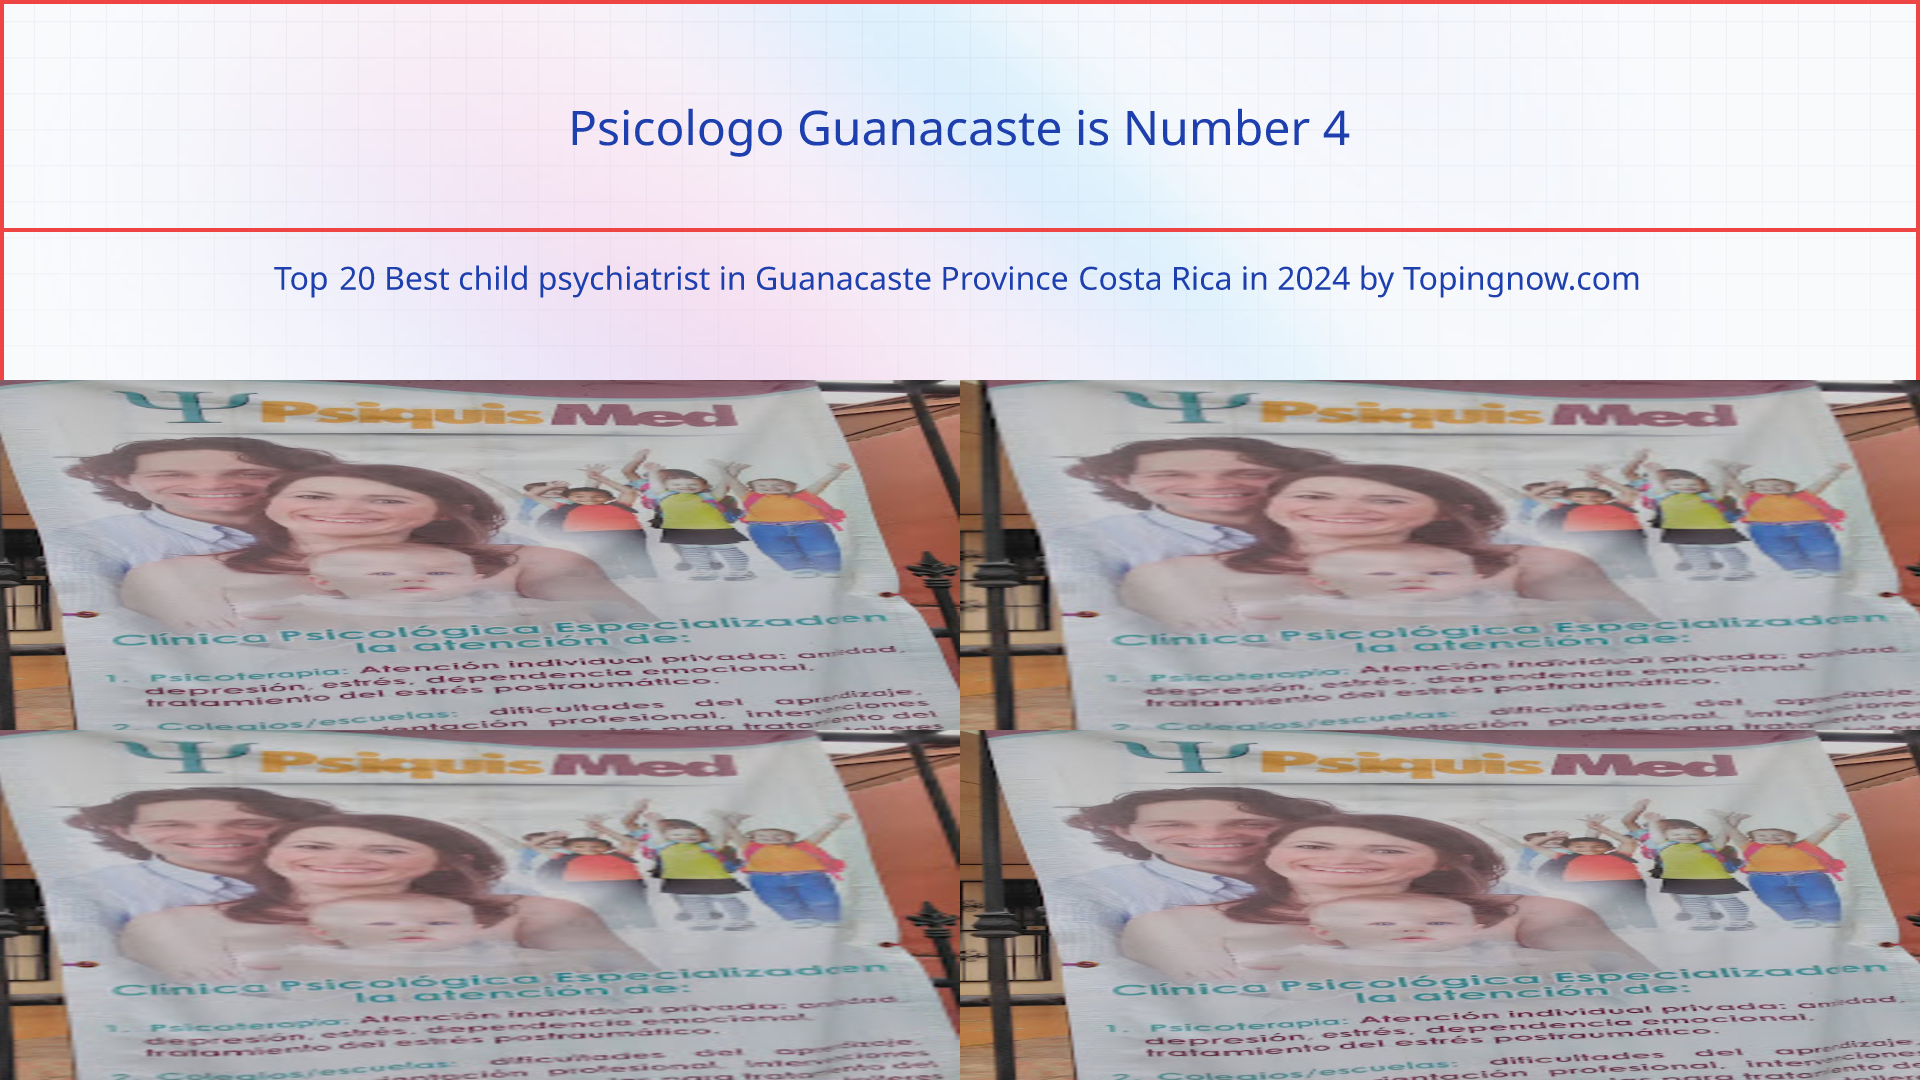 Psicologo Guanacaste: Top 20 Best child psychiatrist in Guanacaste Province Costa Rica in 2024